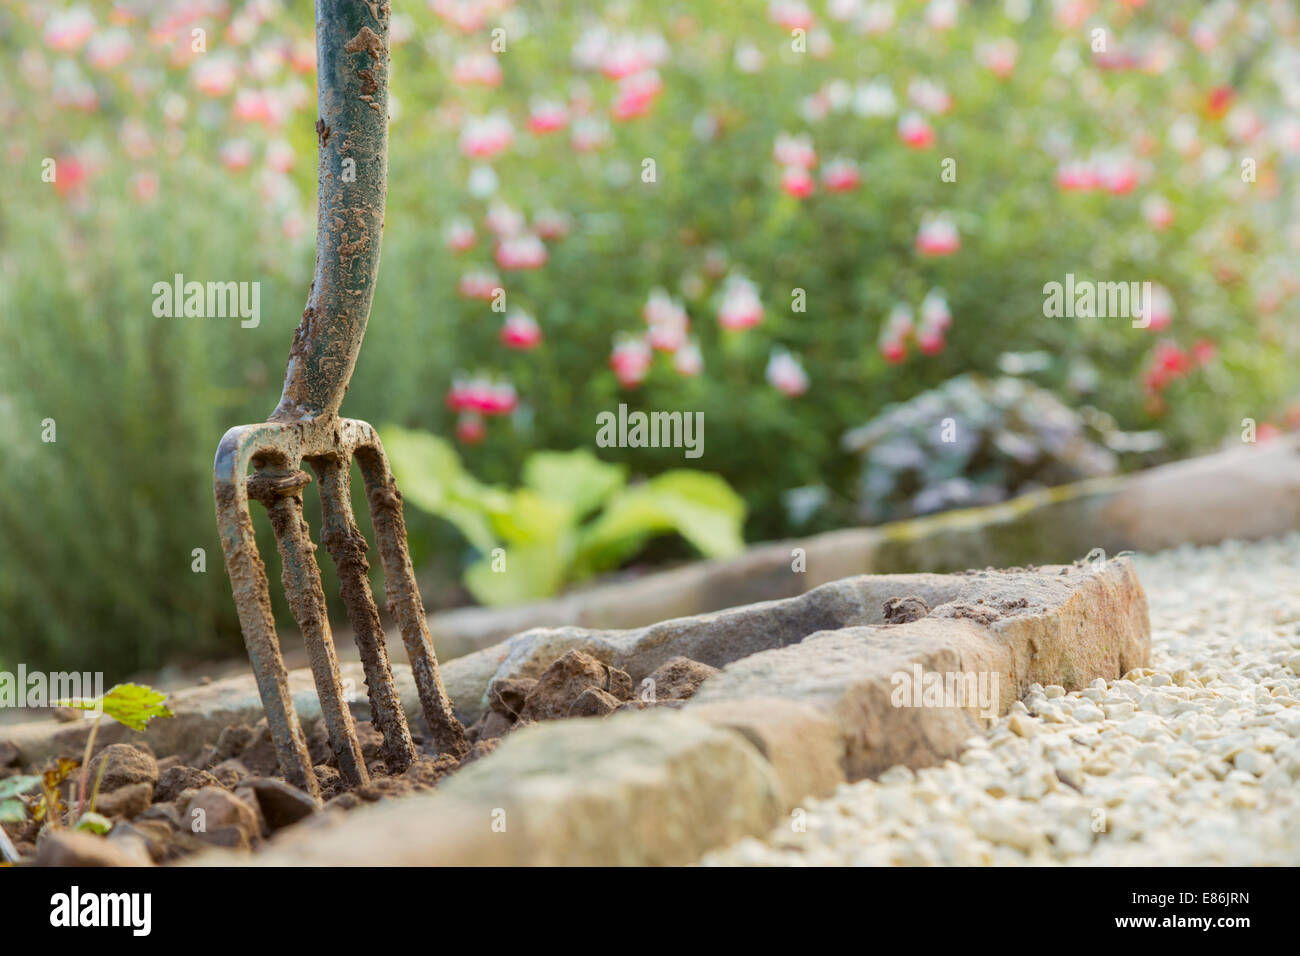 Garden fork in a flower bed. Stock Photo